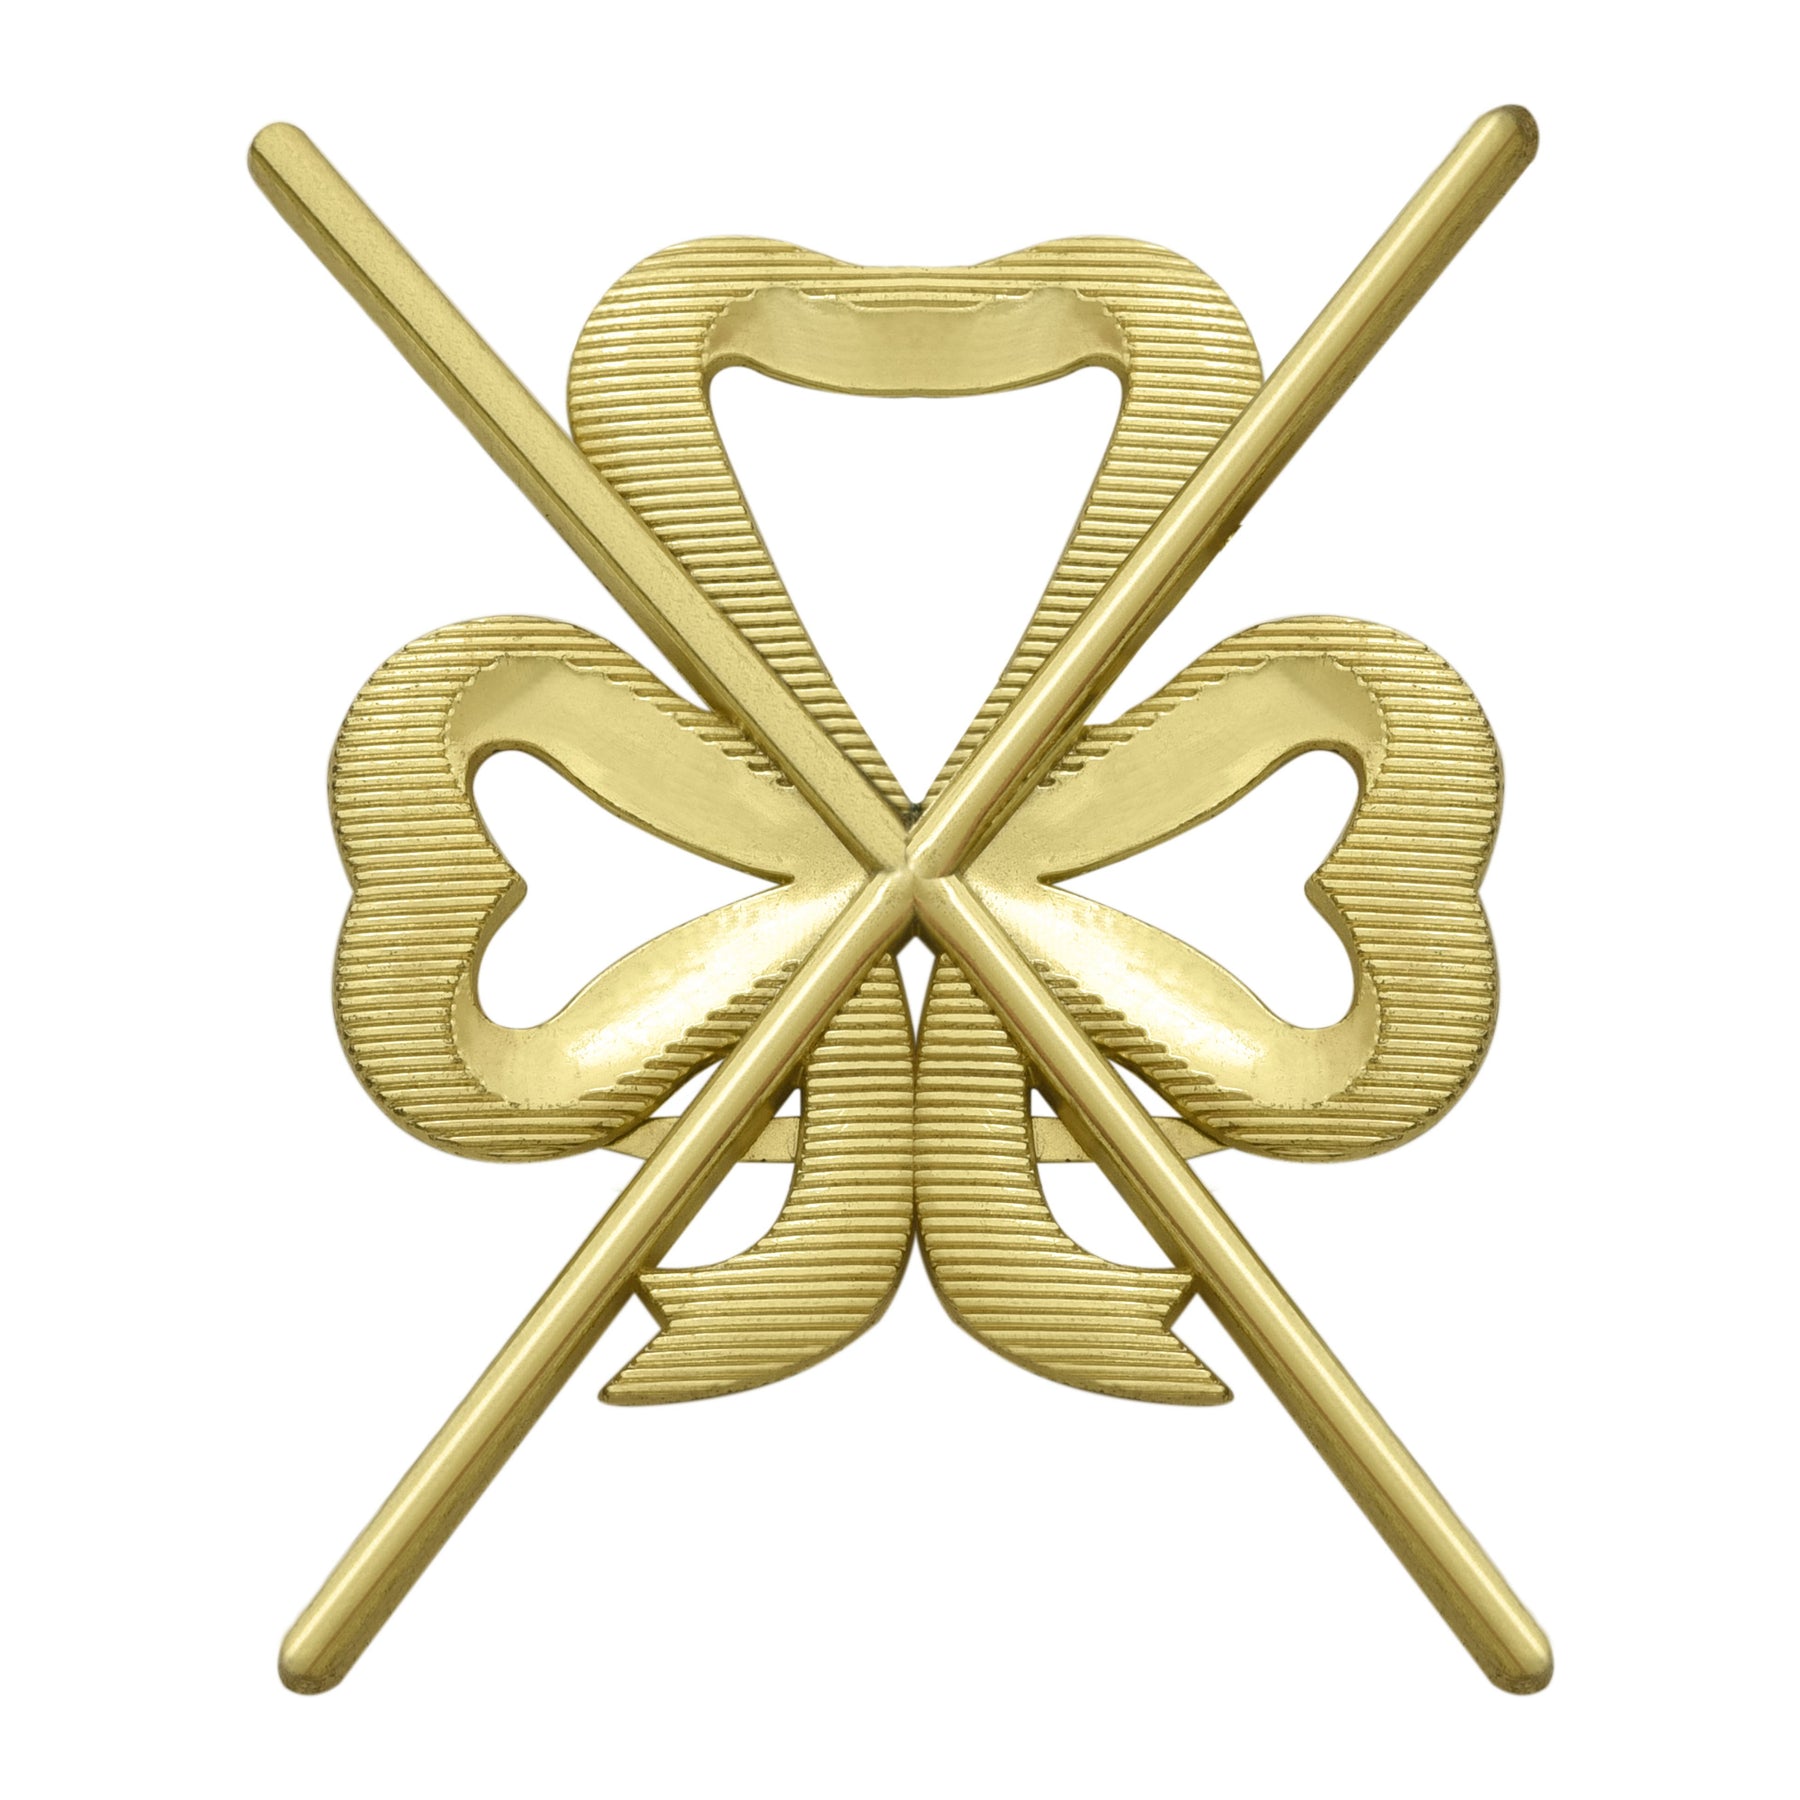 Director Of Ceremonies Craft English Regulation Officer Collar Jewel - Gold Plated - Bricks Masons